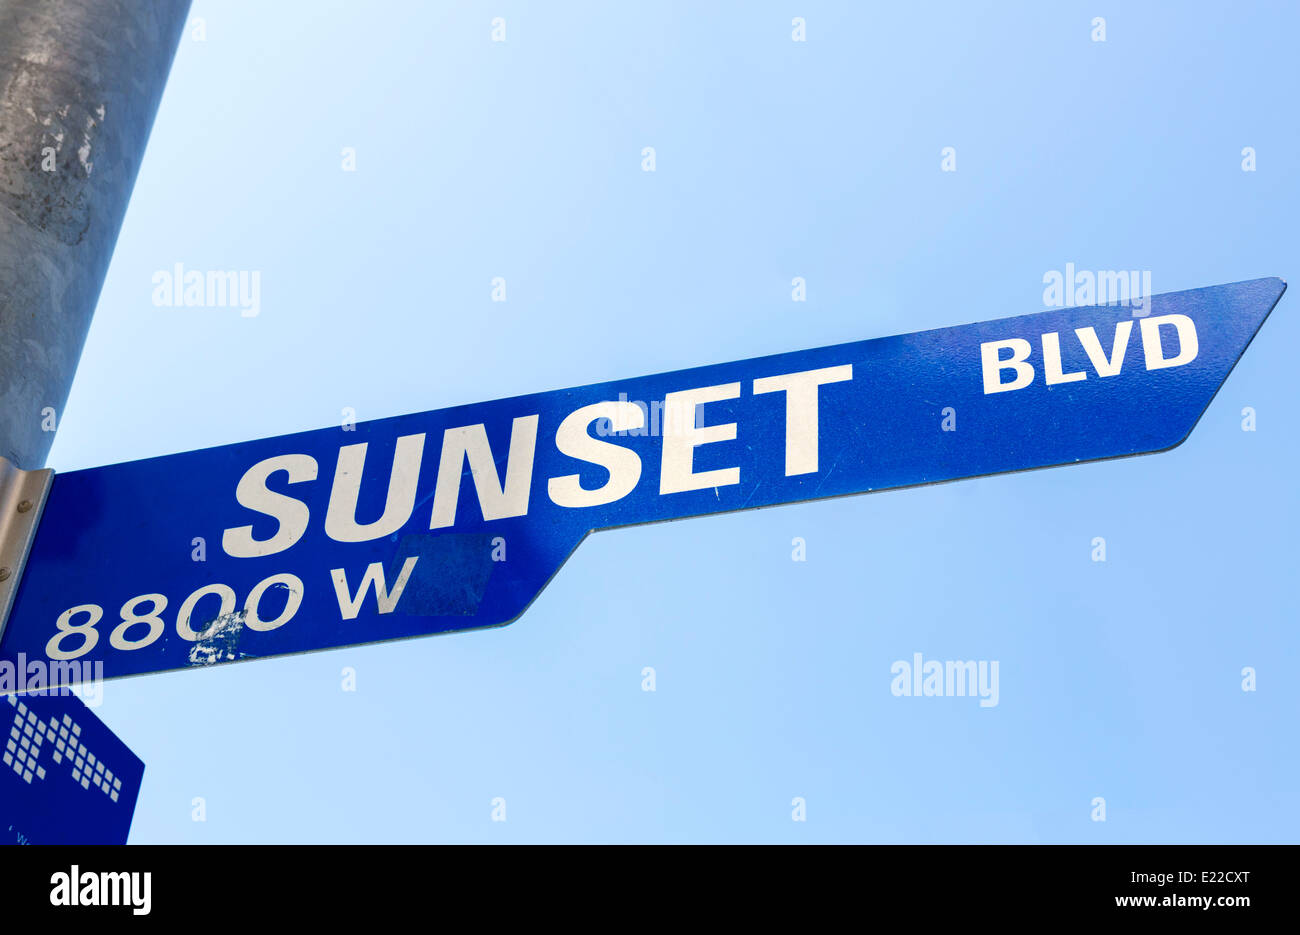 Sunset Boulevard street sign, West Hollywood, Los Angeles, California, USA Stock Photo